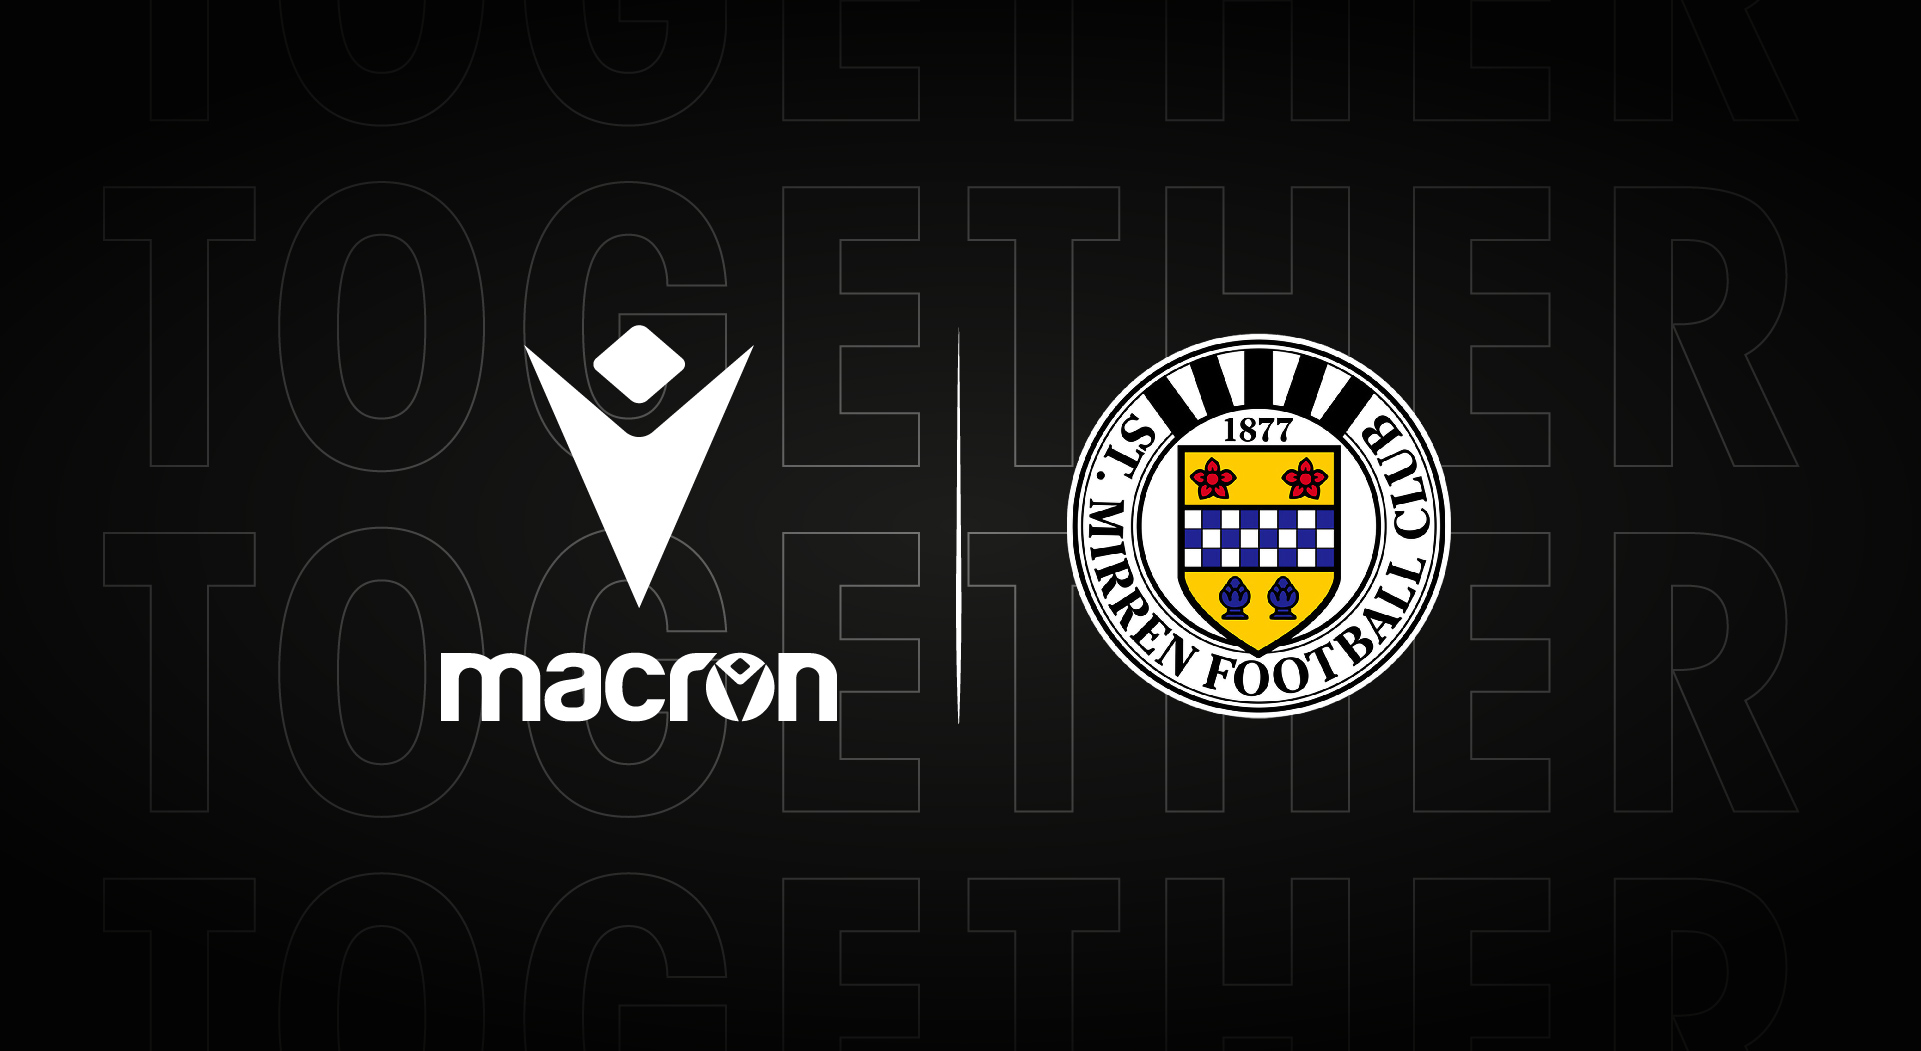 Macron Macron is the new technical partner of Historic Scottish Club St. Mirren | Image 1